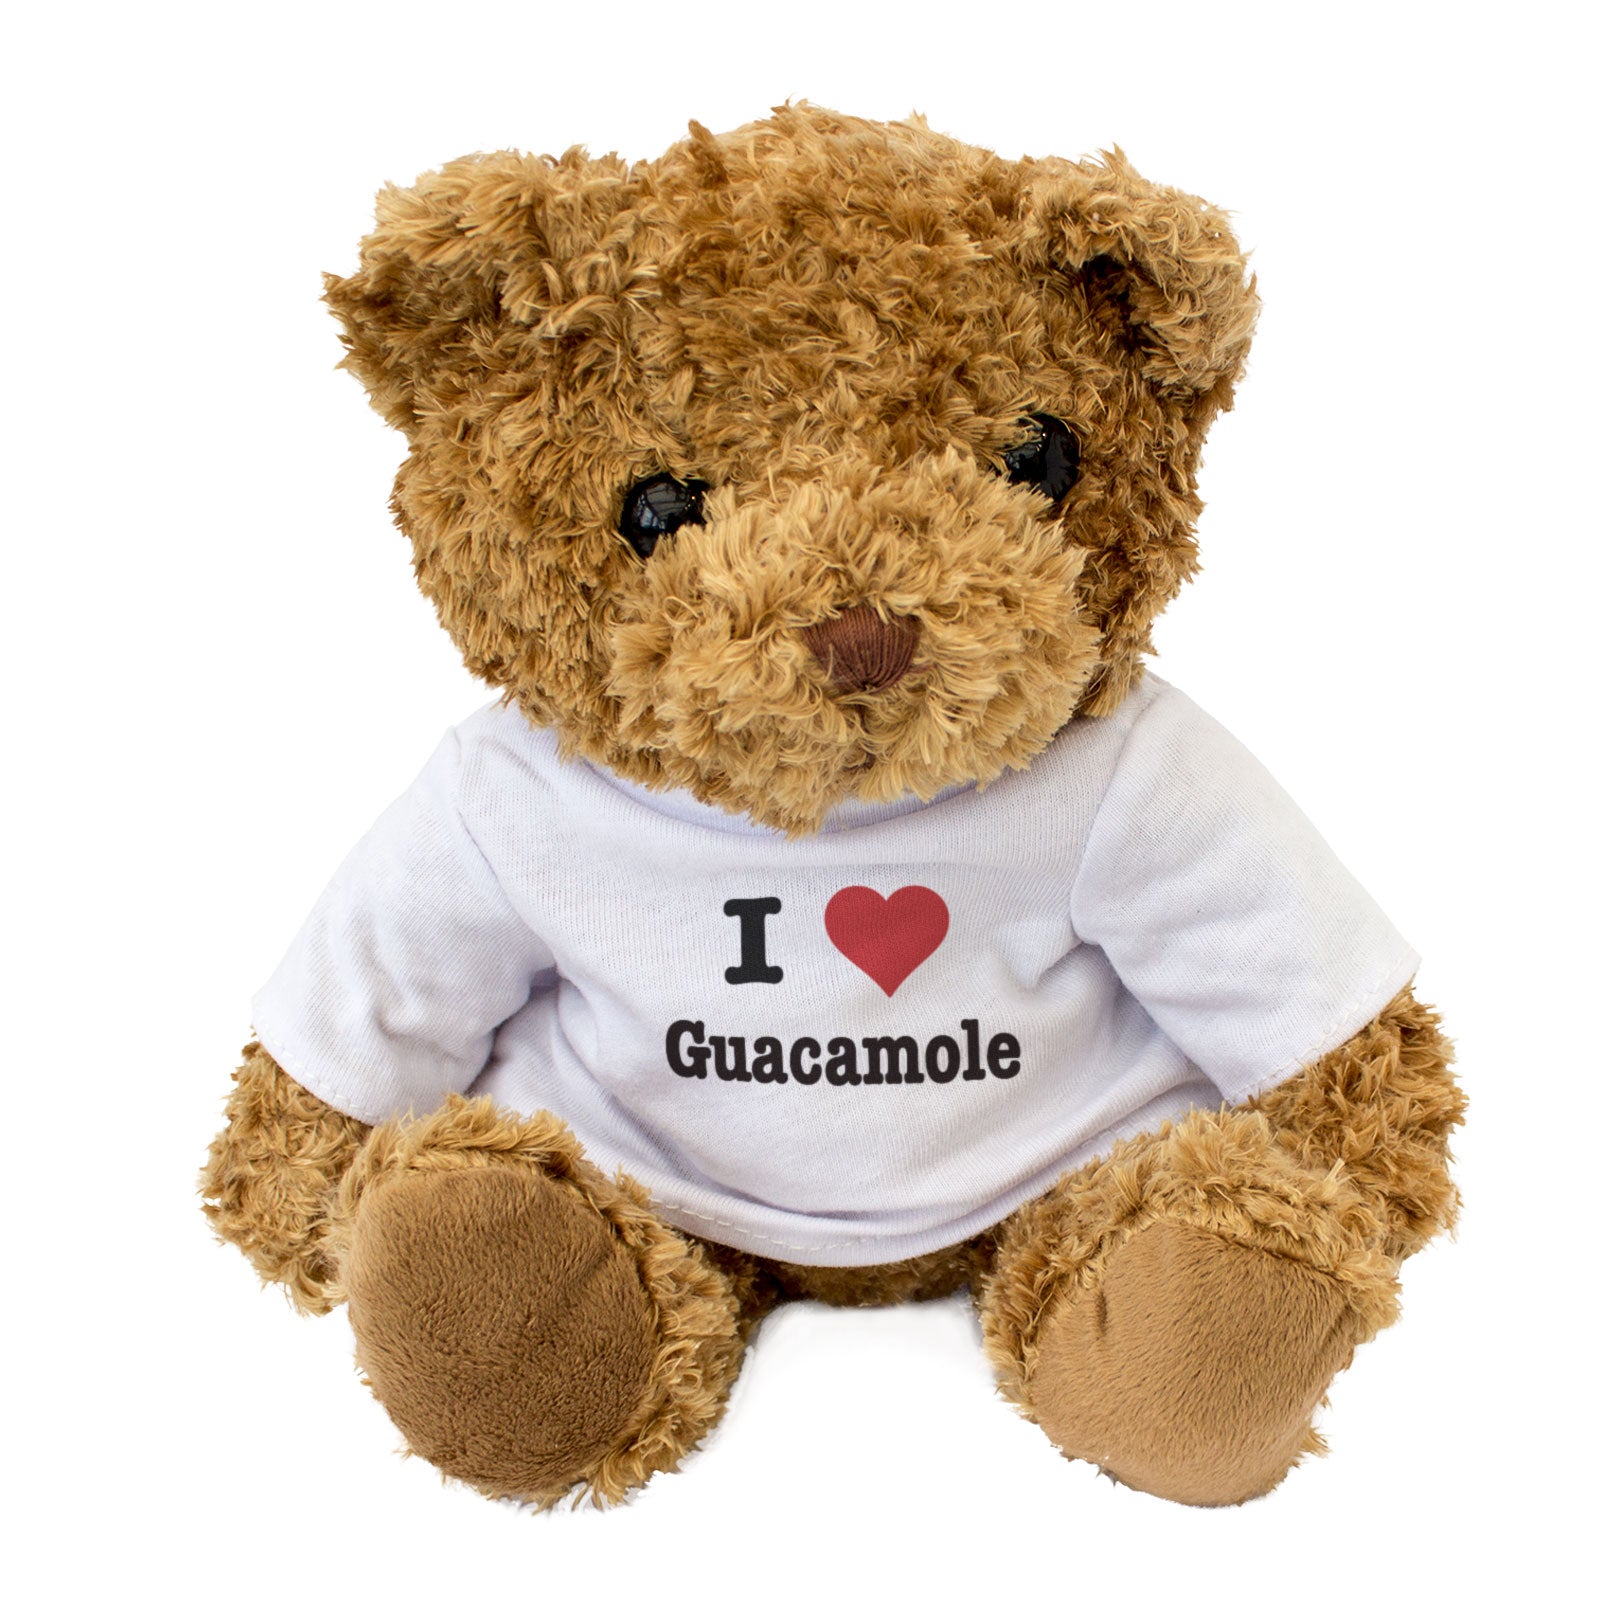 I Love Guacamole - Teddy Bear